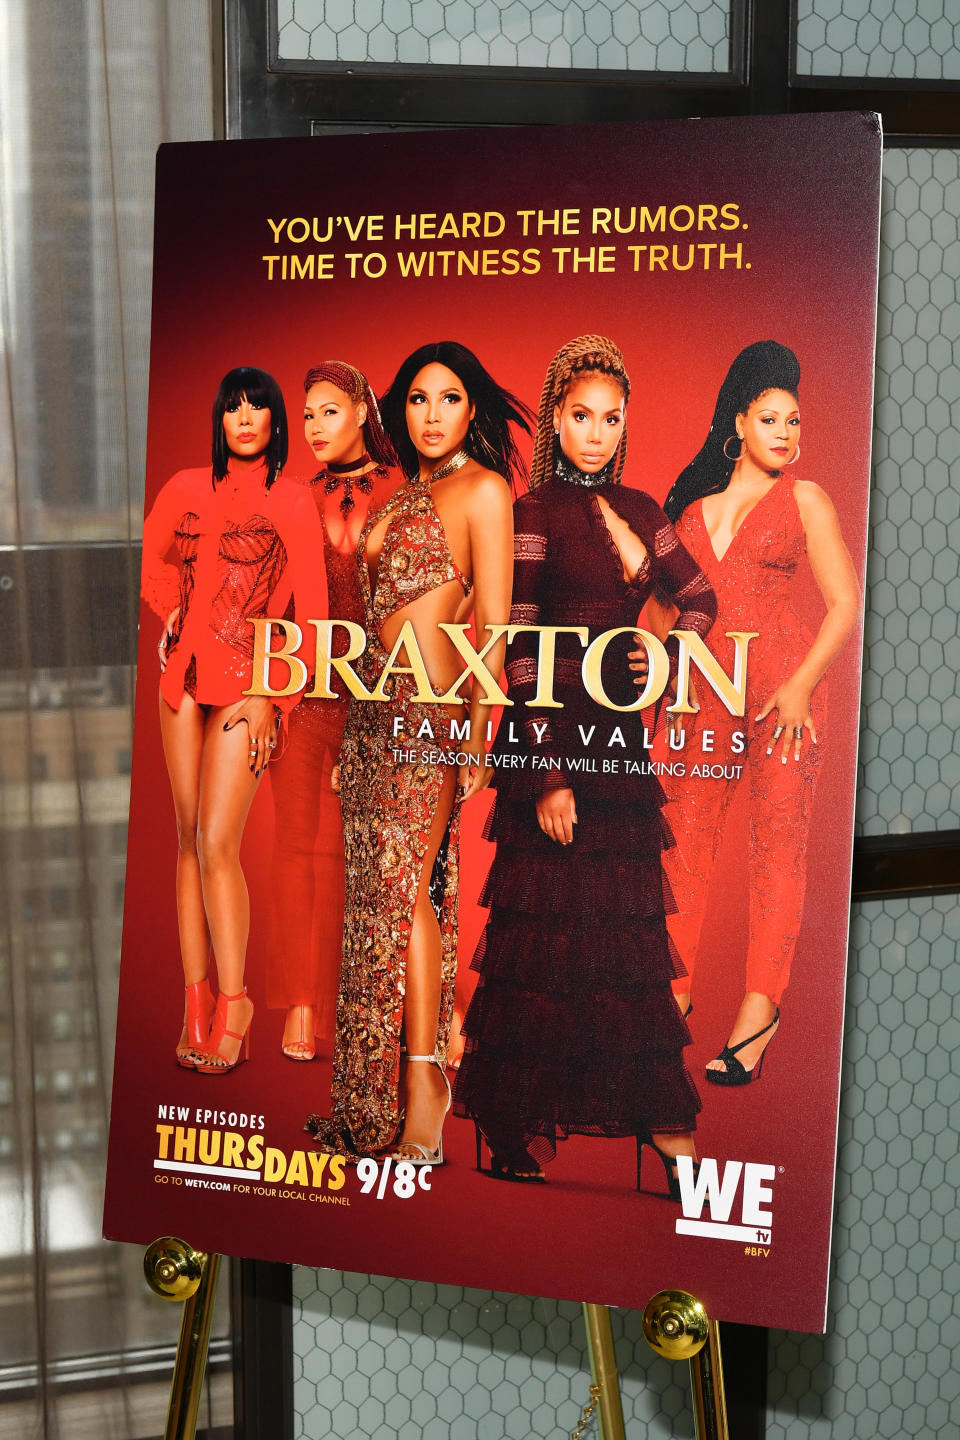 Braxton Family Values show promotion